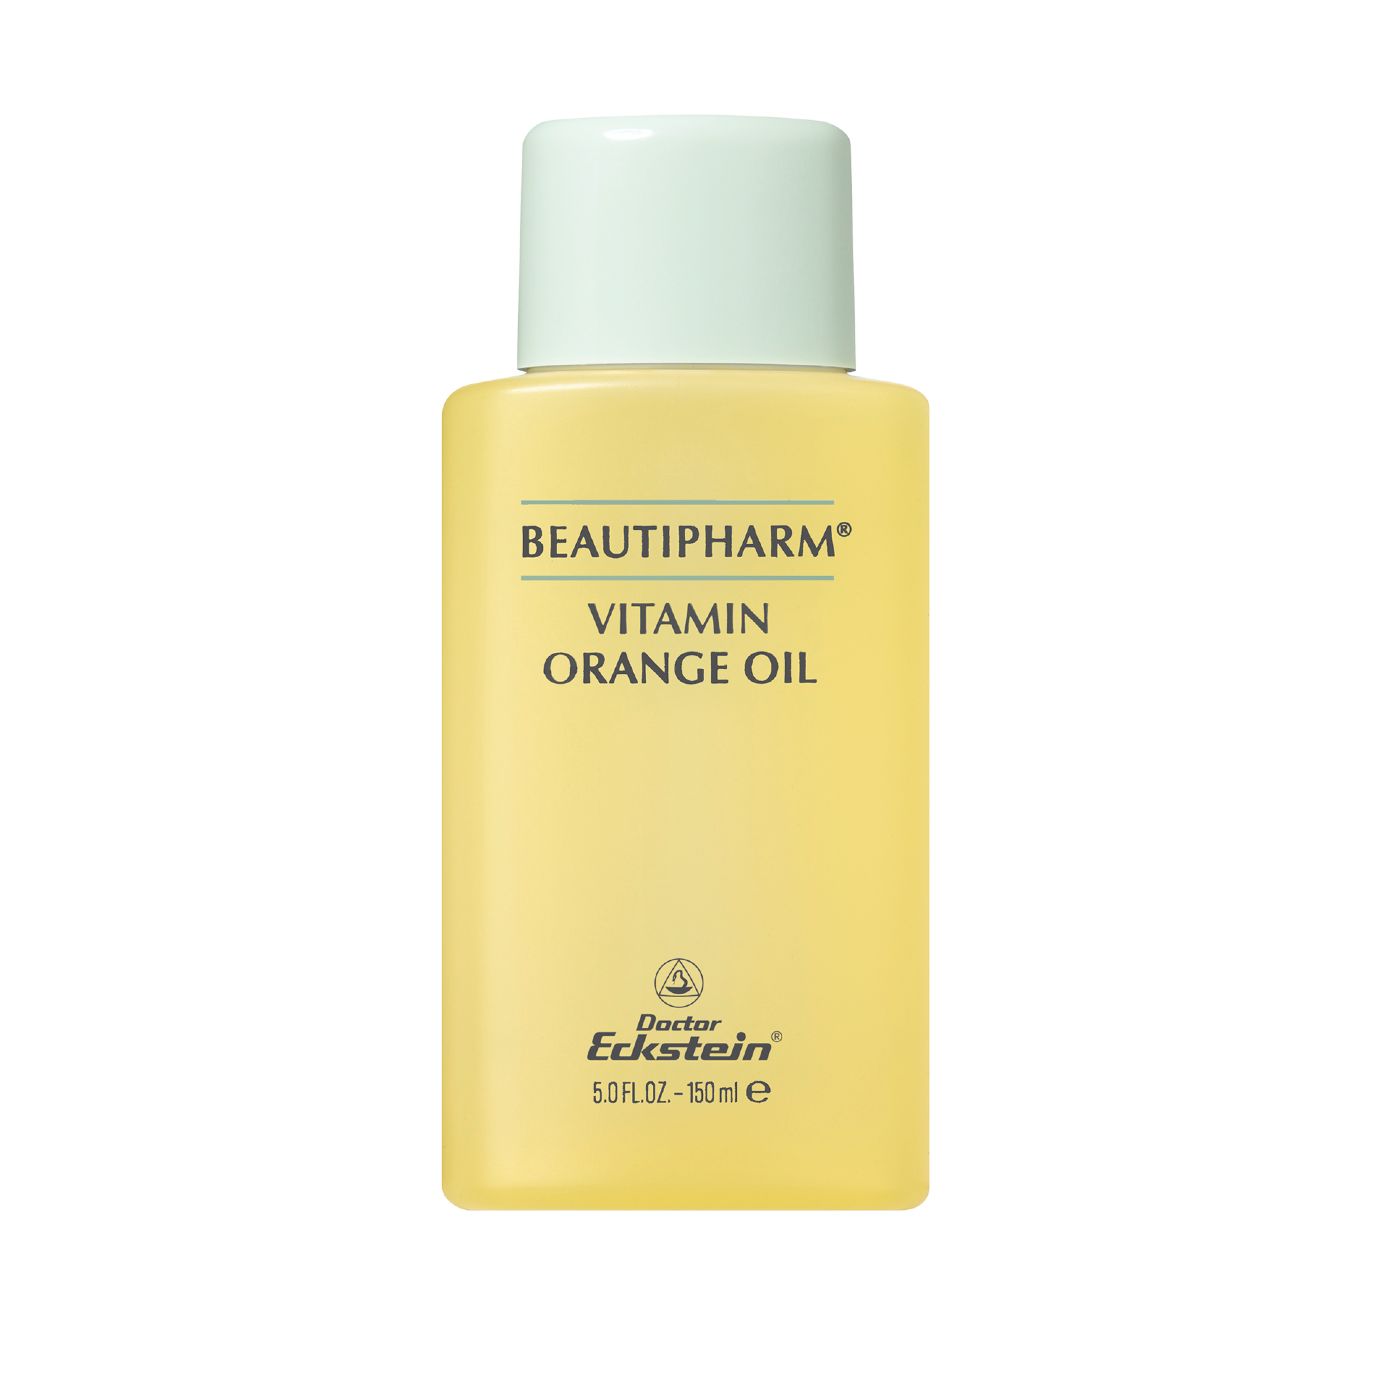 Beautipharm® Vitamin Orange Oil